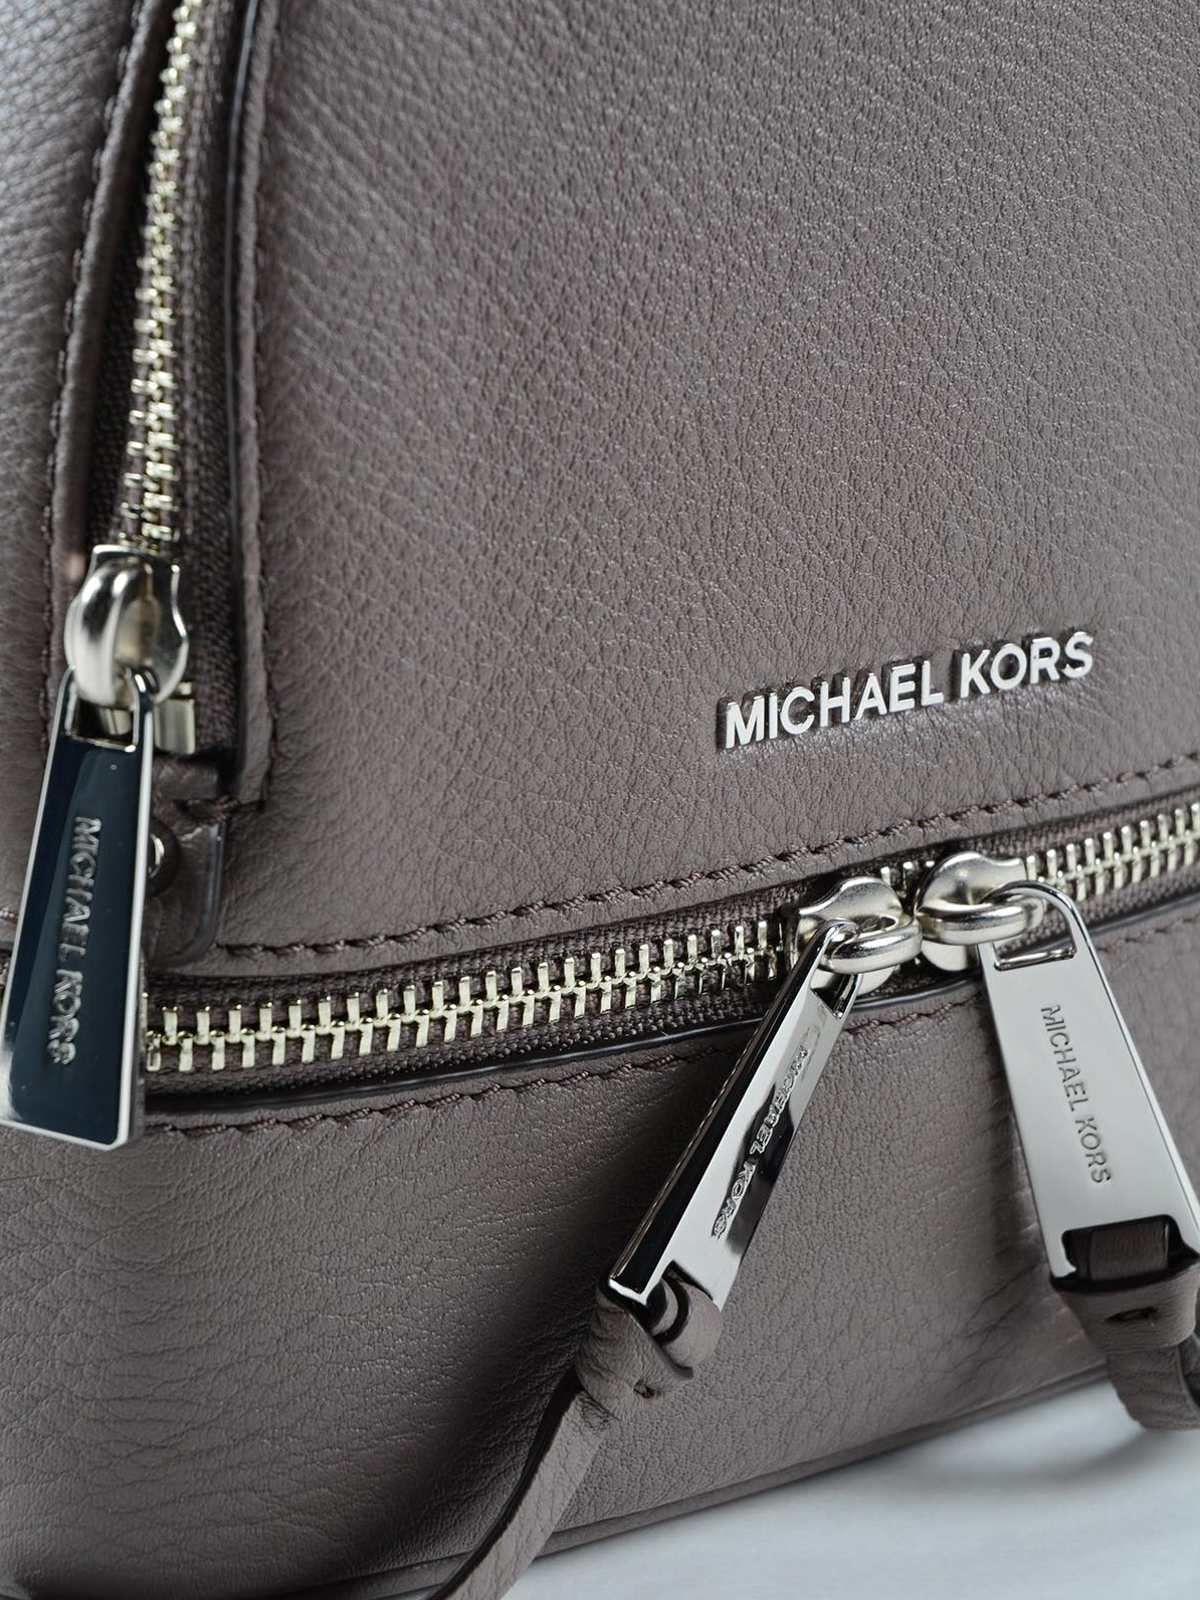 Michael Kors outlet canada online Cheap Michael Kors handbags on sale